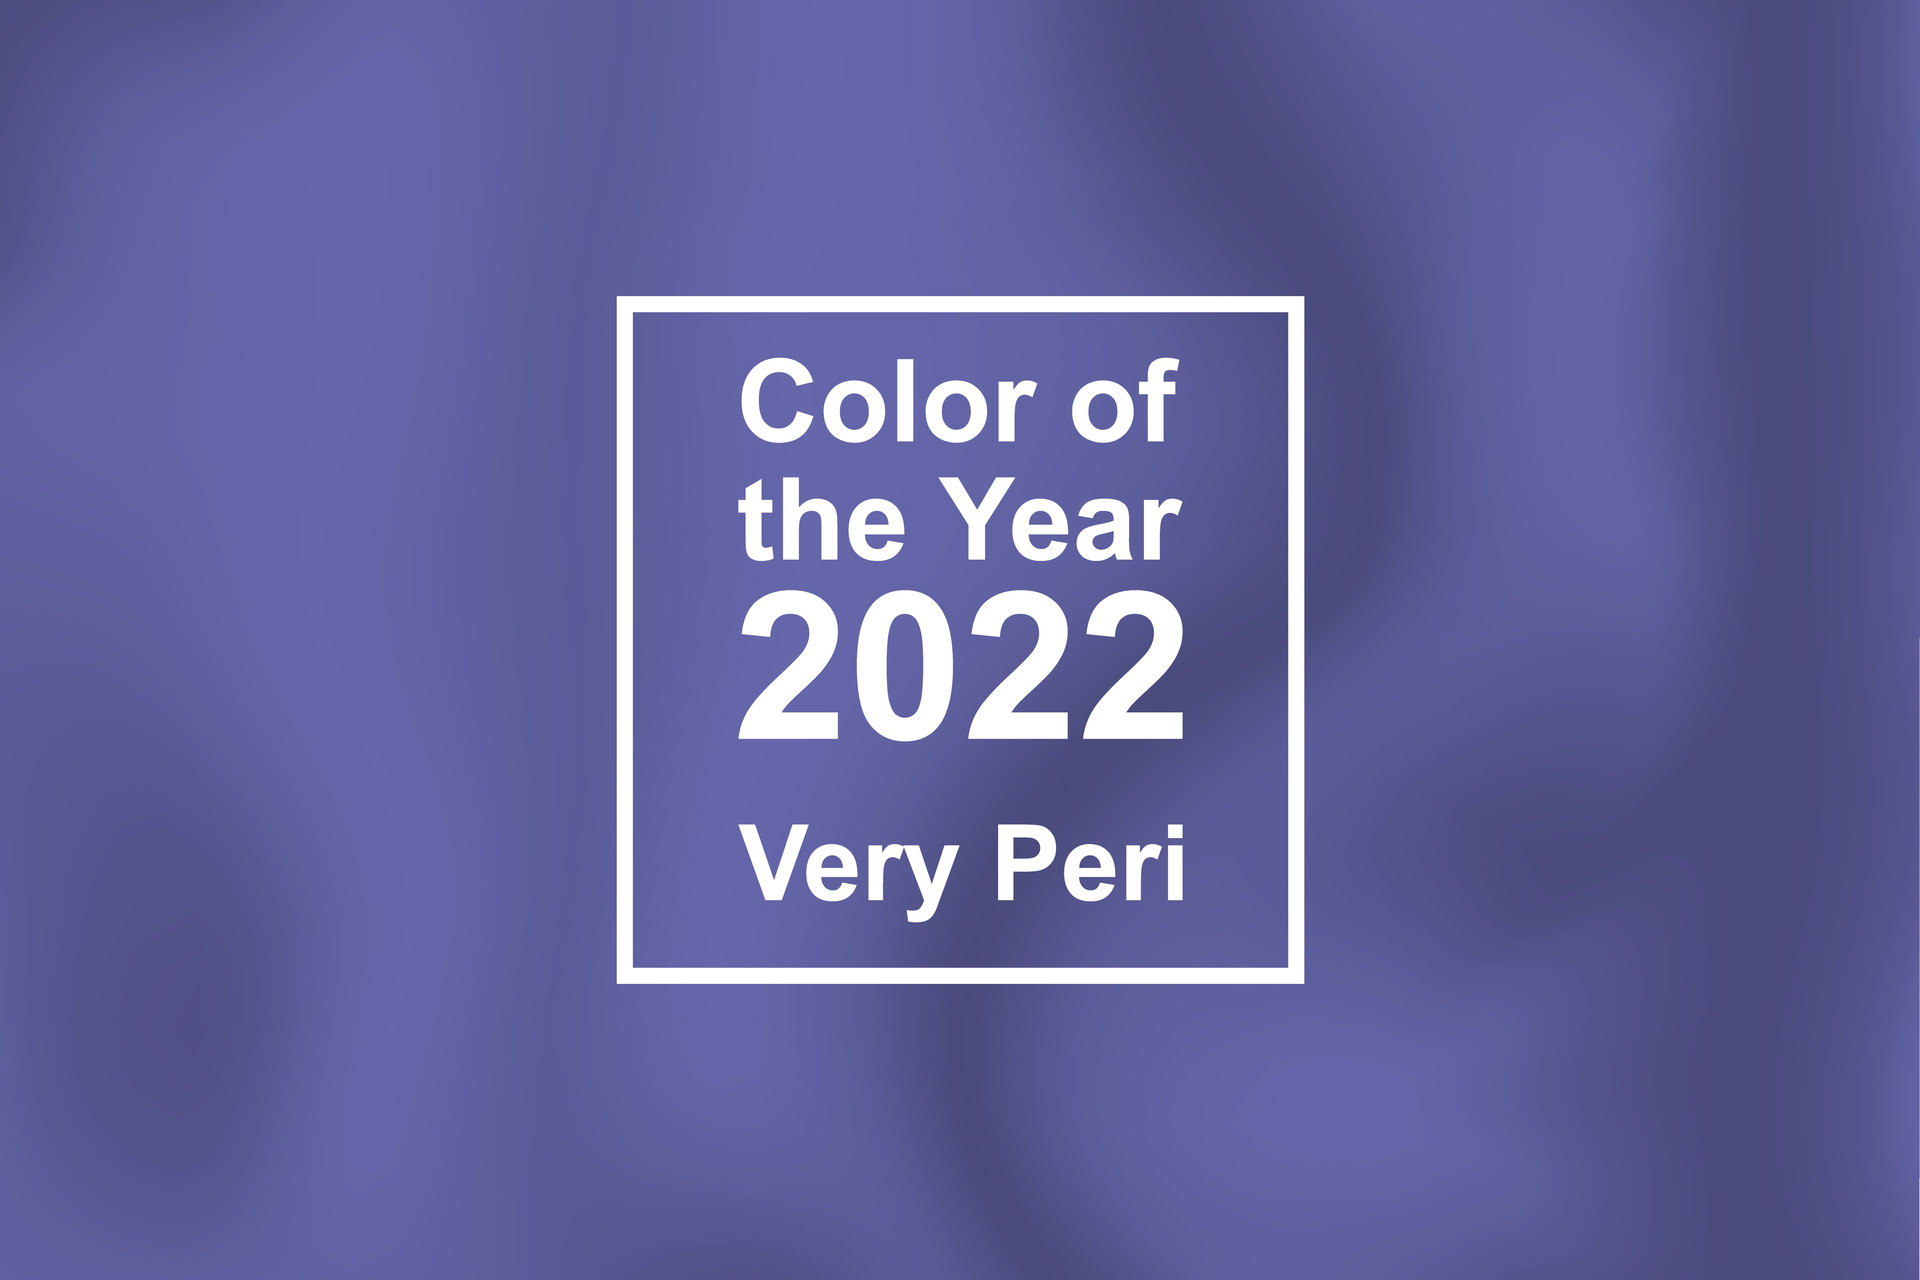 Shades of blue color scheme : Periwinkle + marian blue + Powder blue